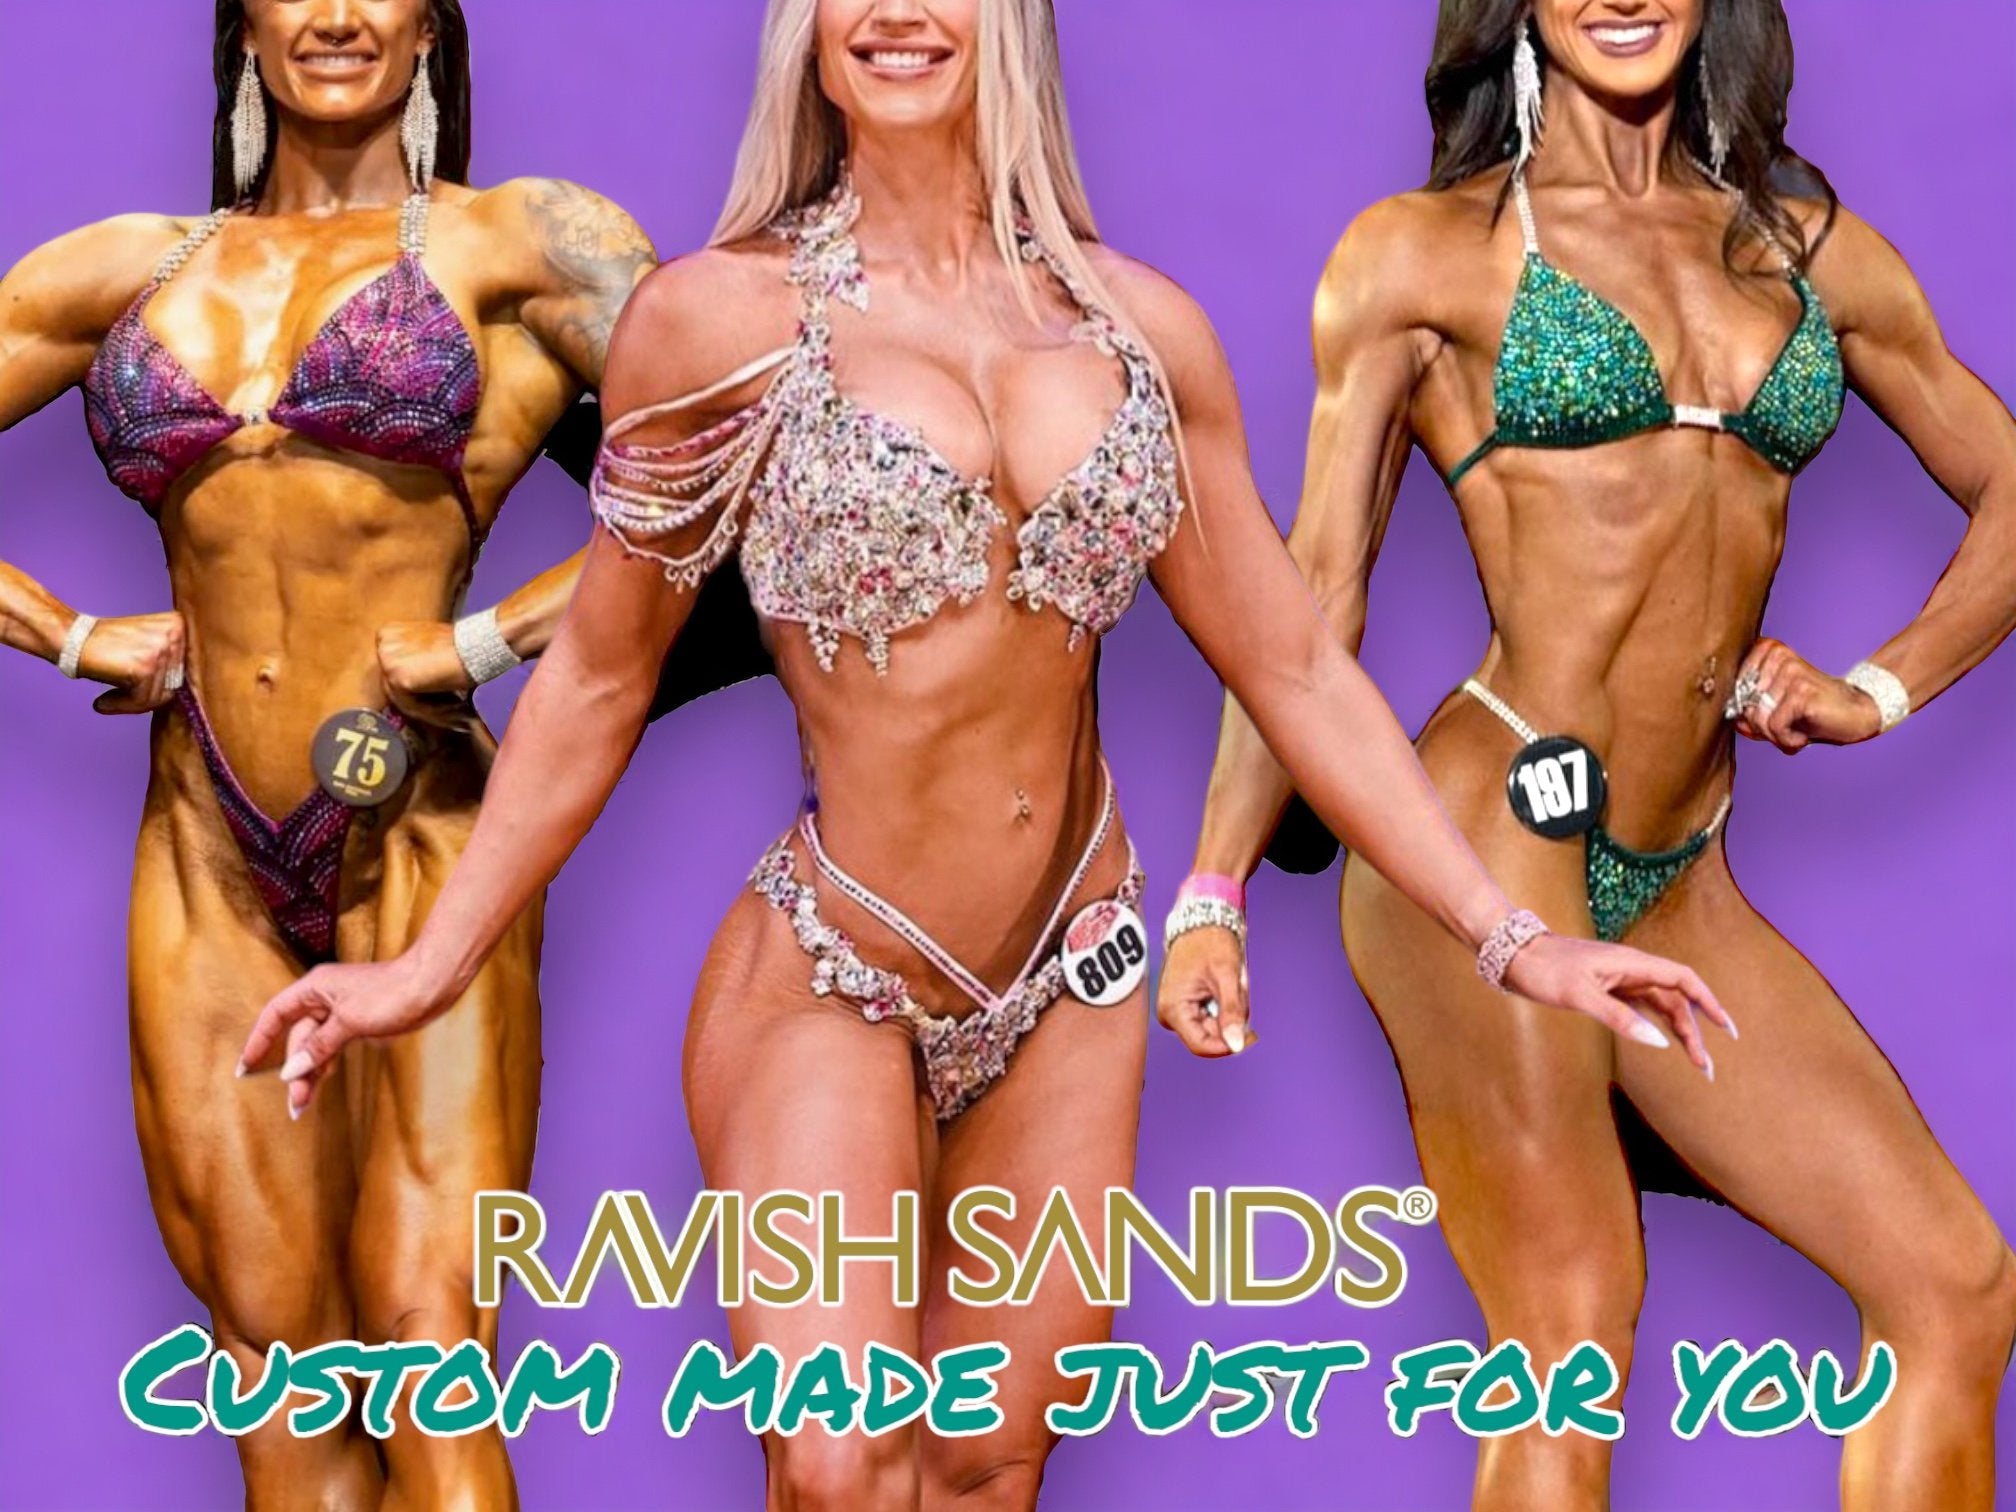 custom Competition bikini by Ravish Sands – Ravish Sands